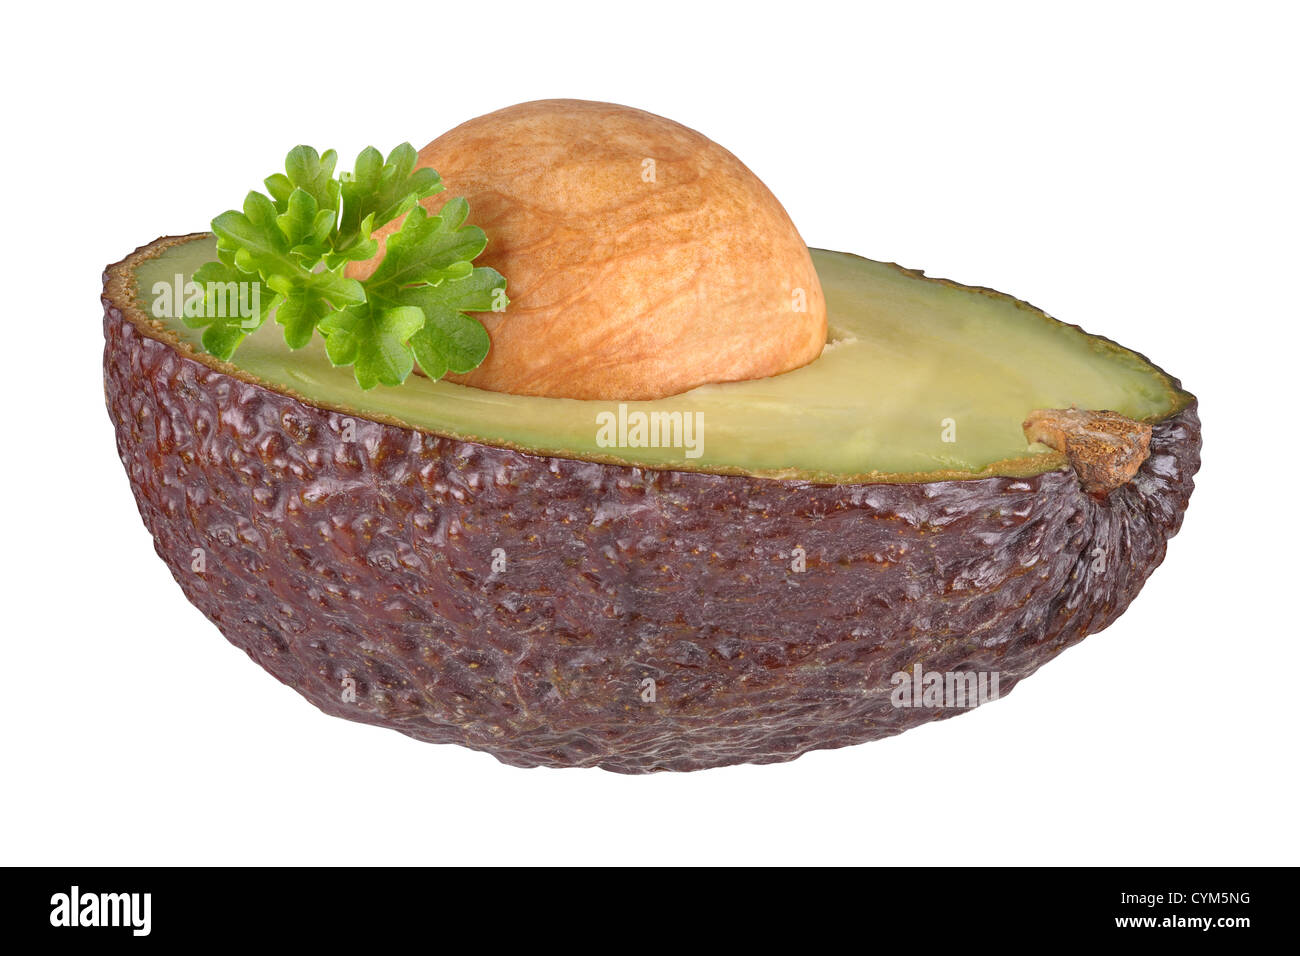 Halved avocado with stone and parsley decoration Stock Photo